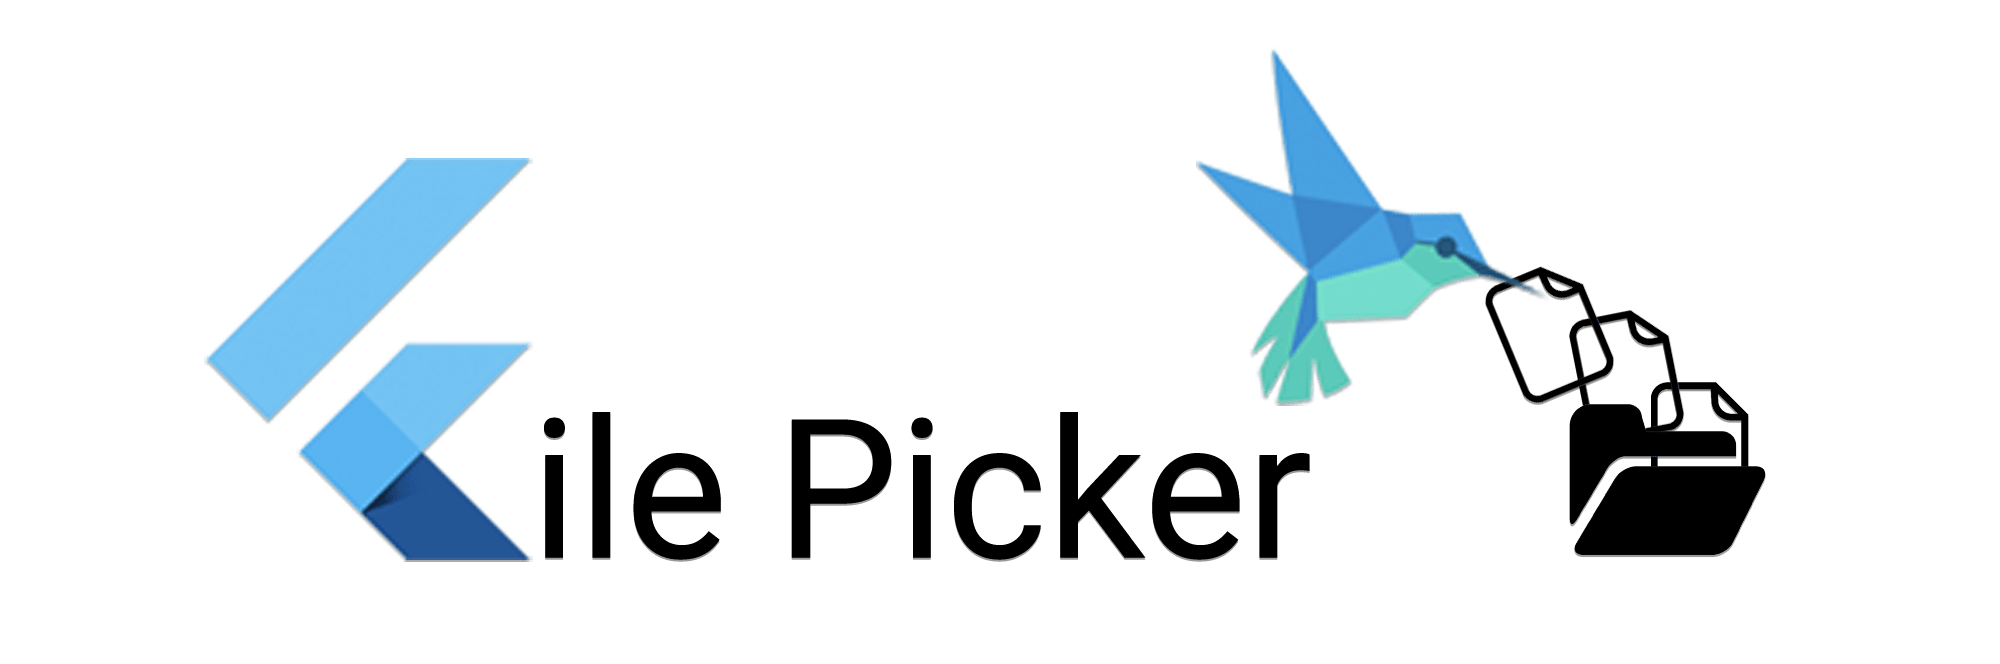 fluter_file_picker